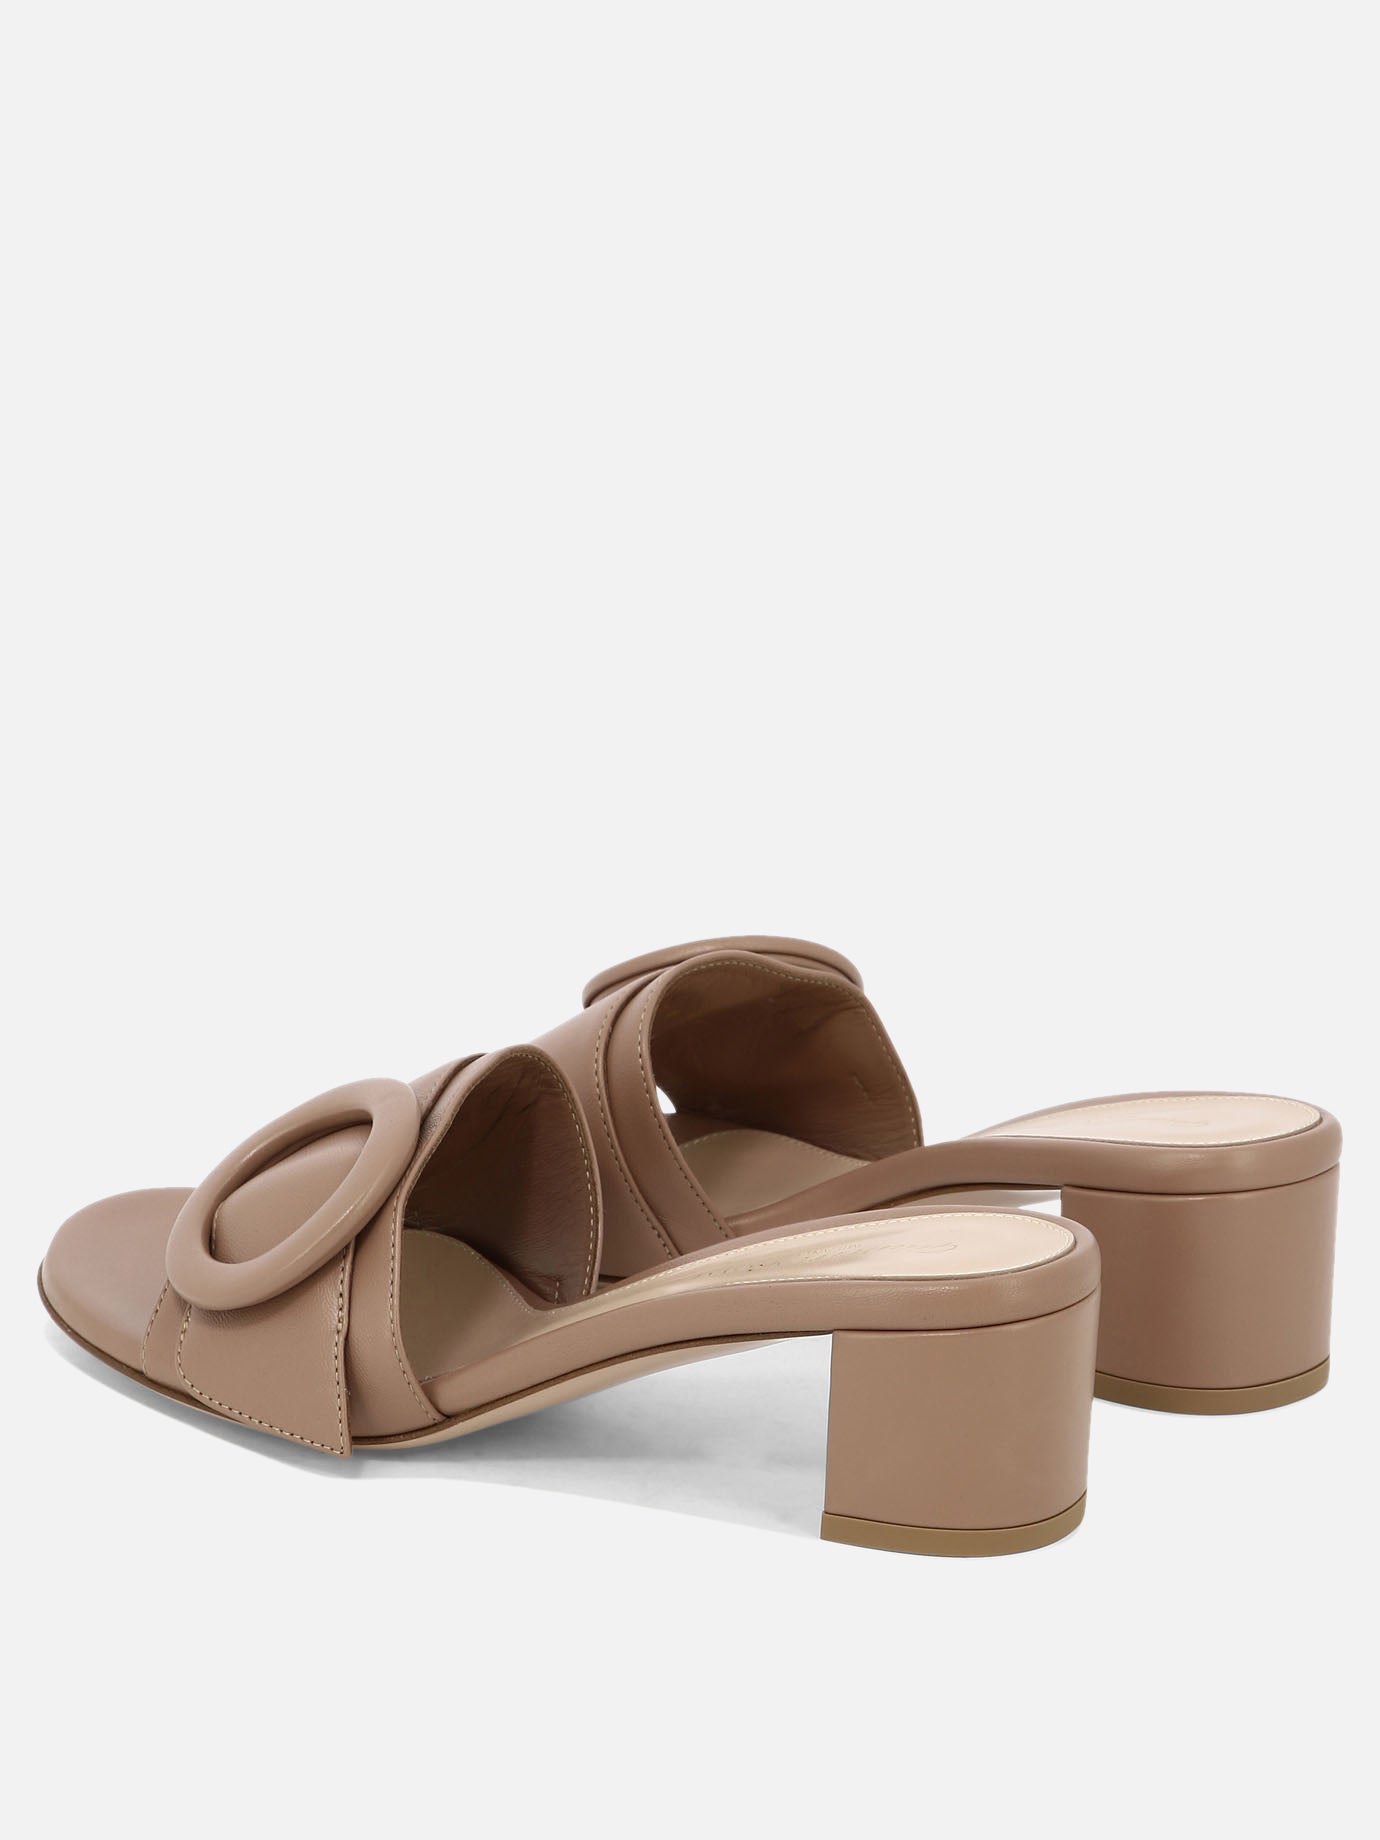 "Venezia" sandals